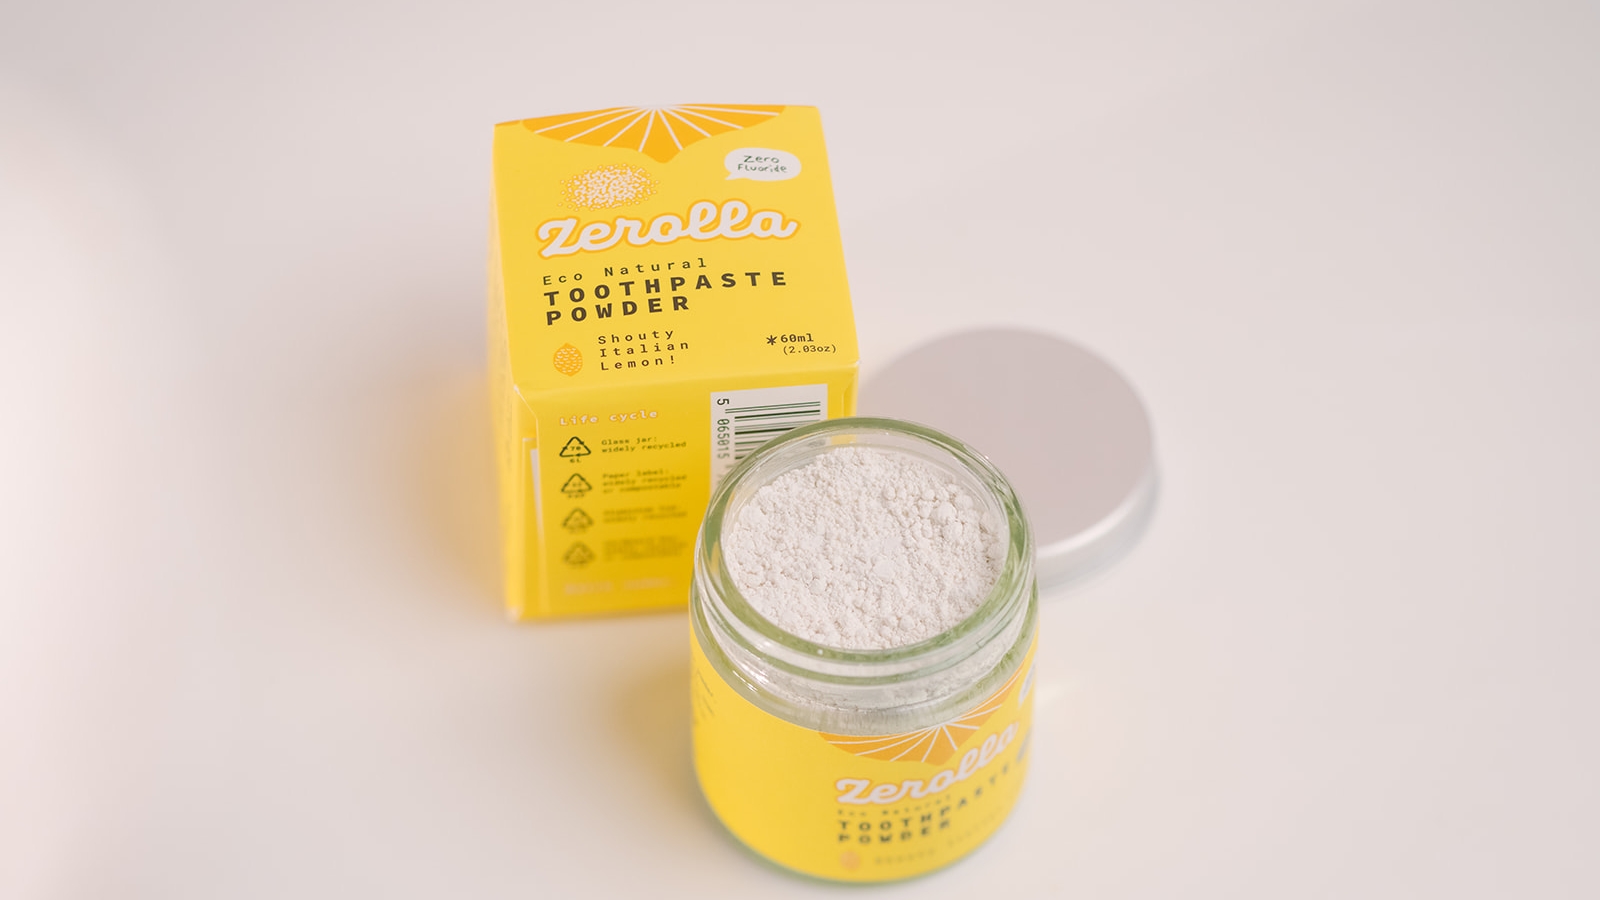 A yellow jar of Zerolla toothpaste powder